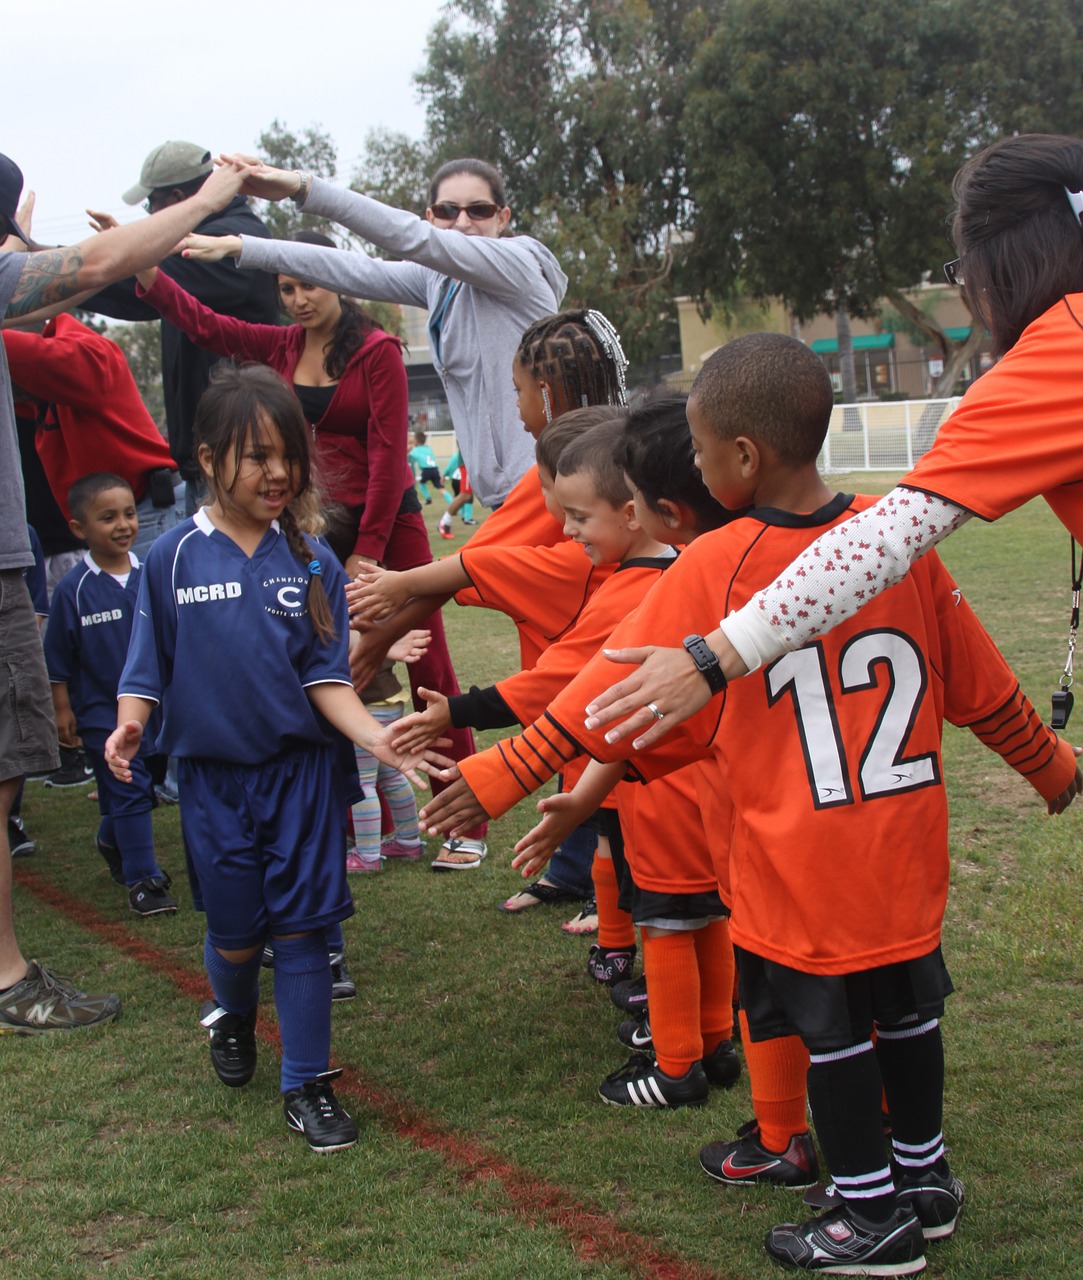 children football match sportsmanship free photo